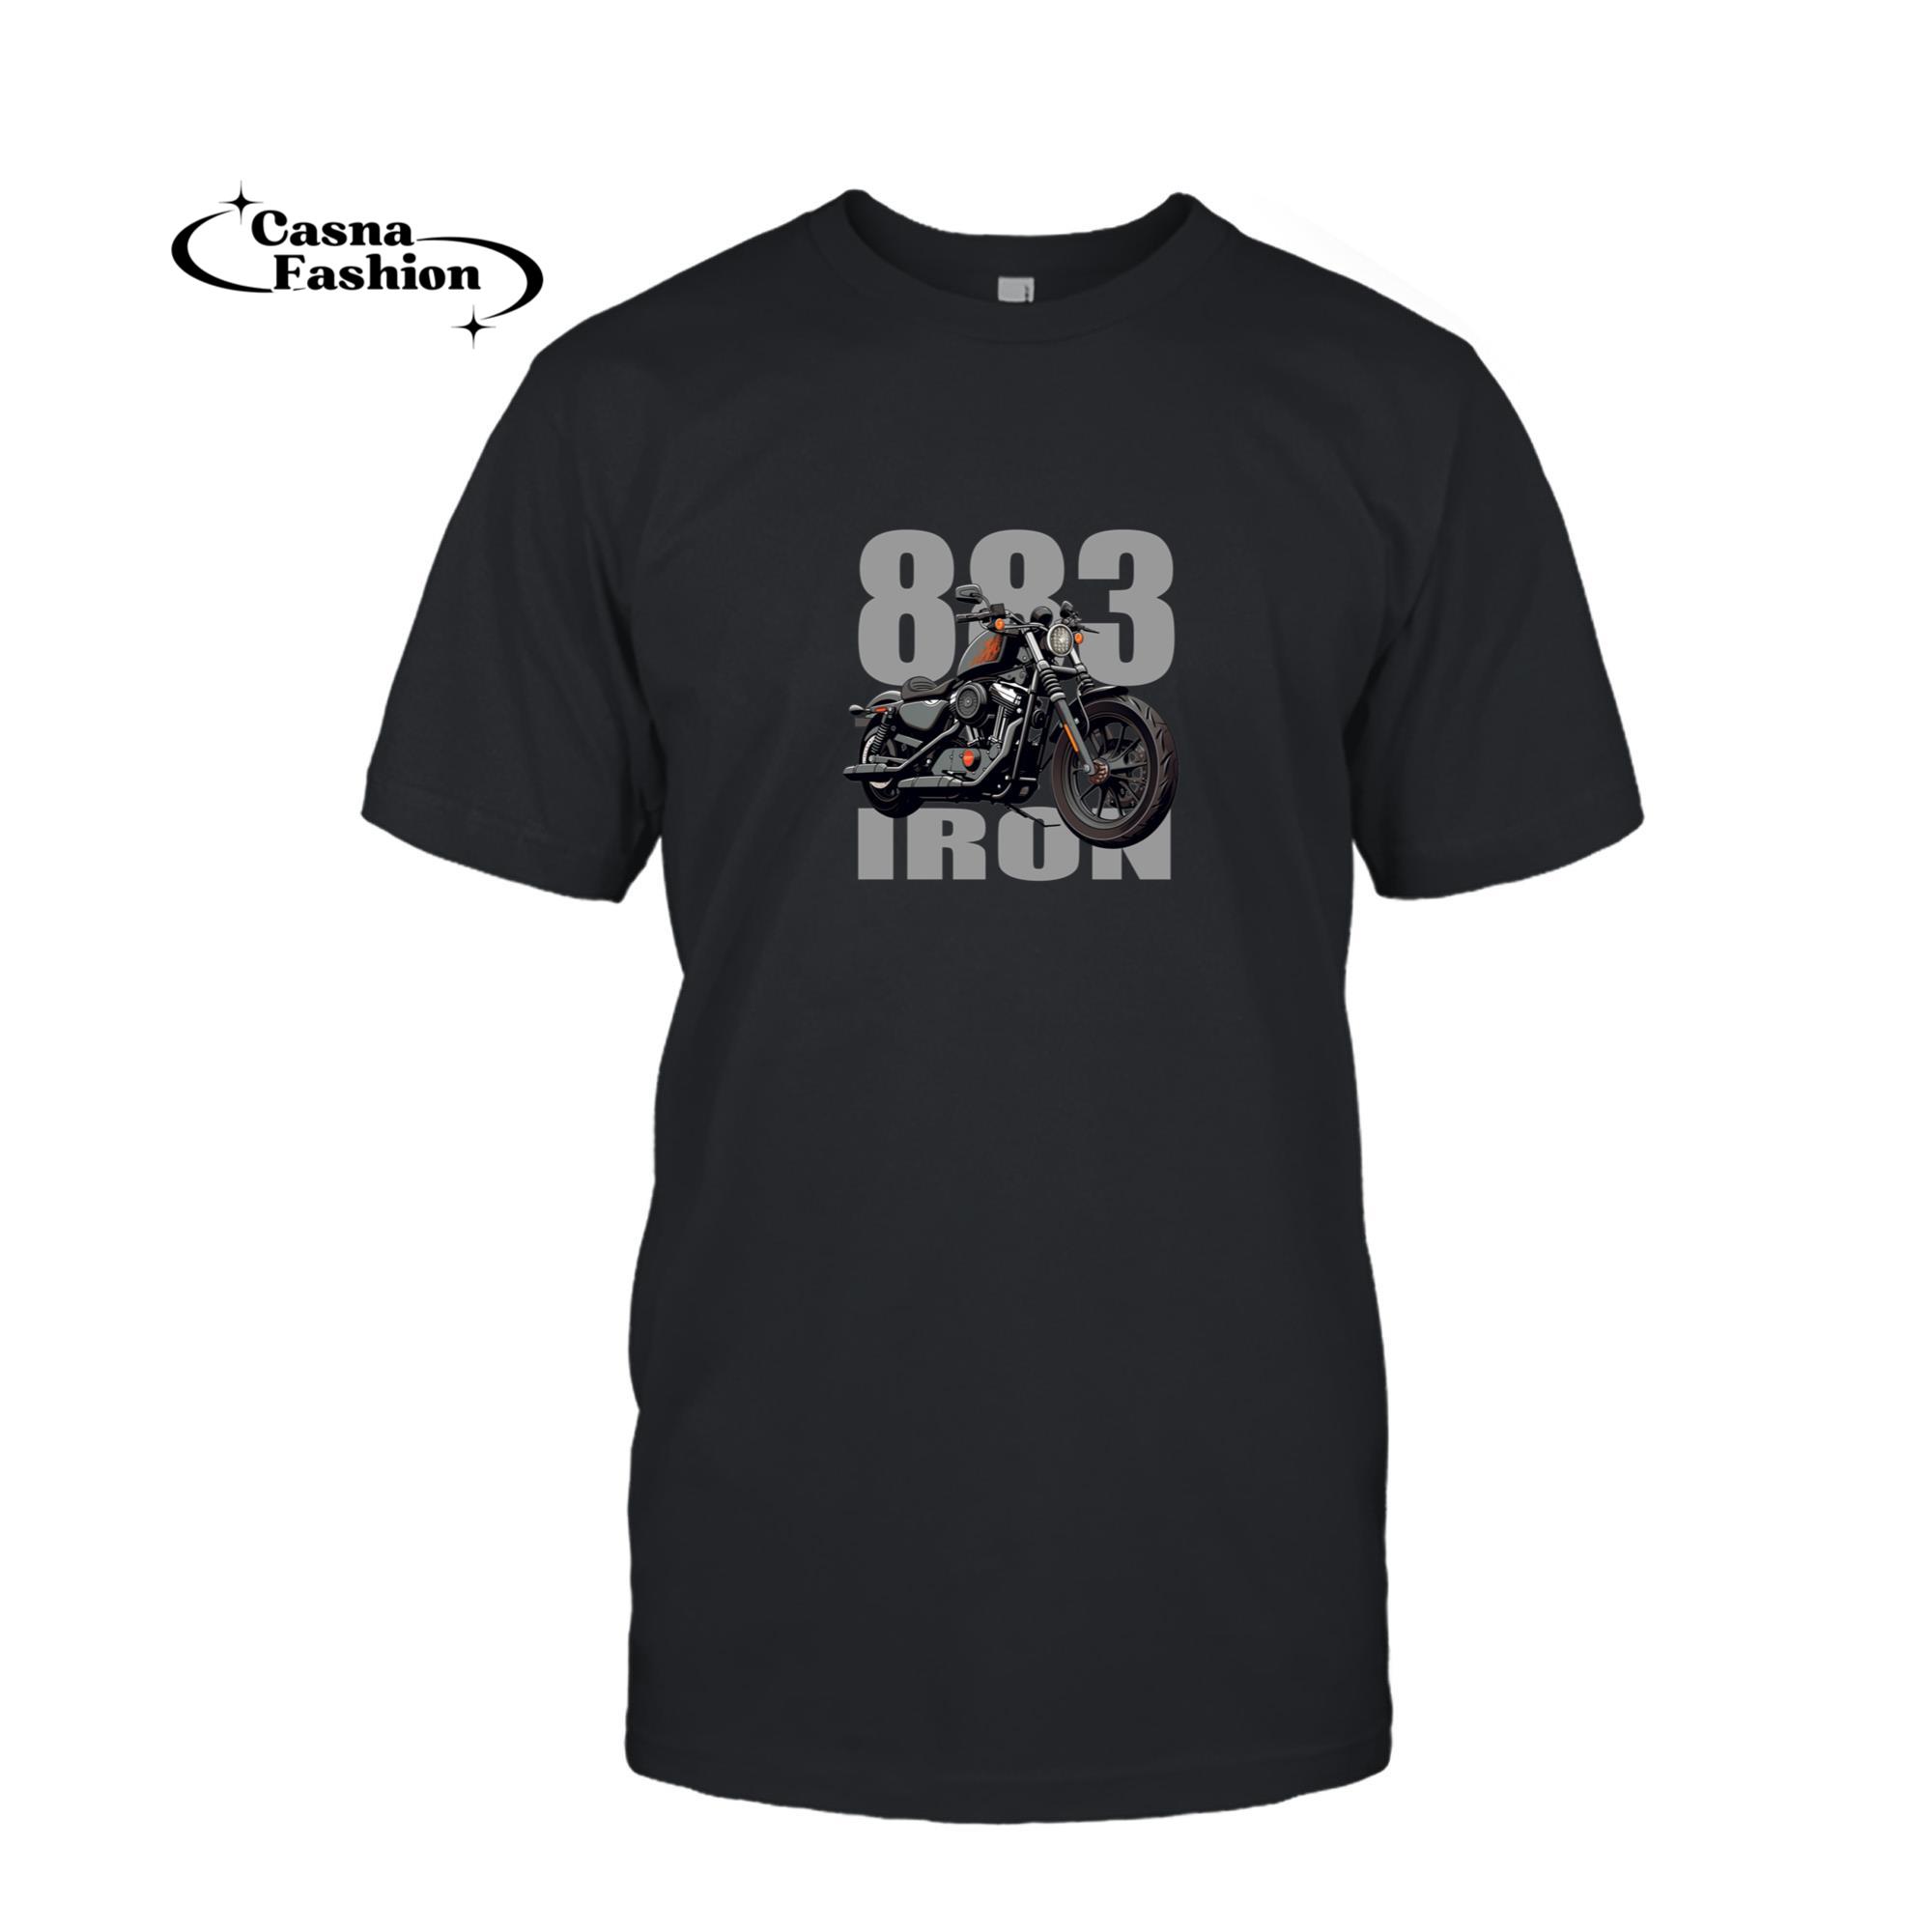 casnafashion_T-shirt_883 Iron Classic Motorcycle Biker Pullover Hoodie_T-shirt_Black